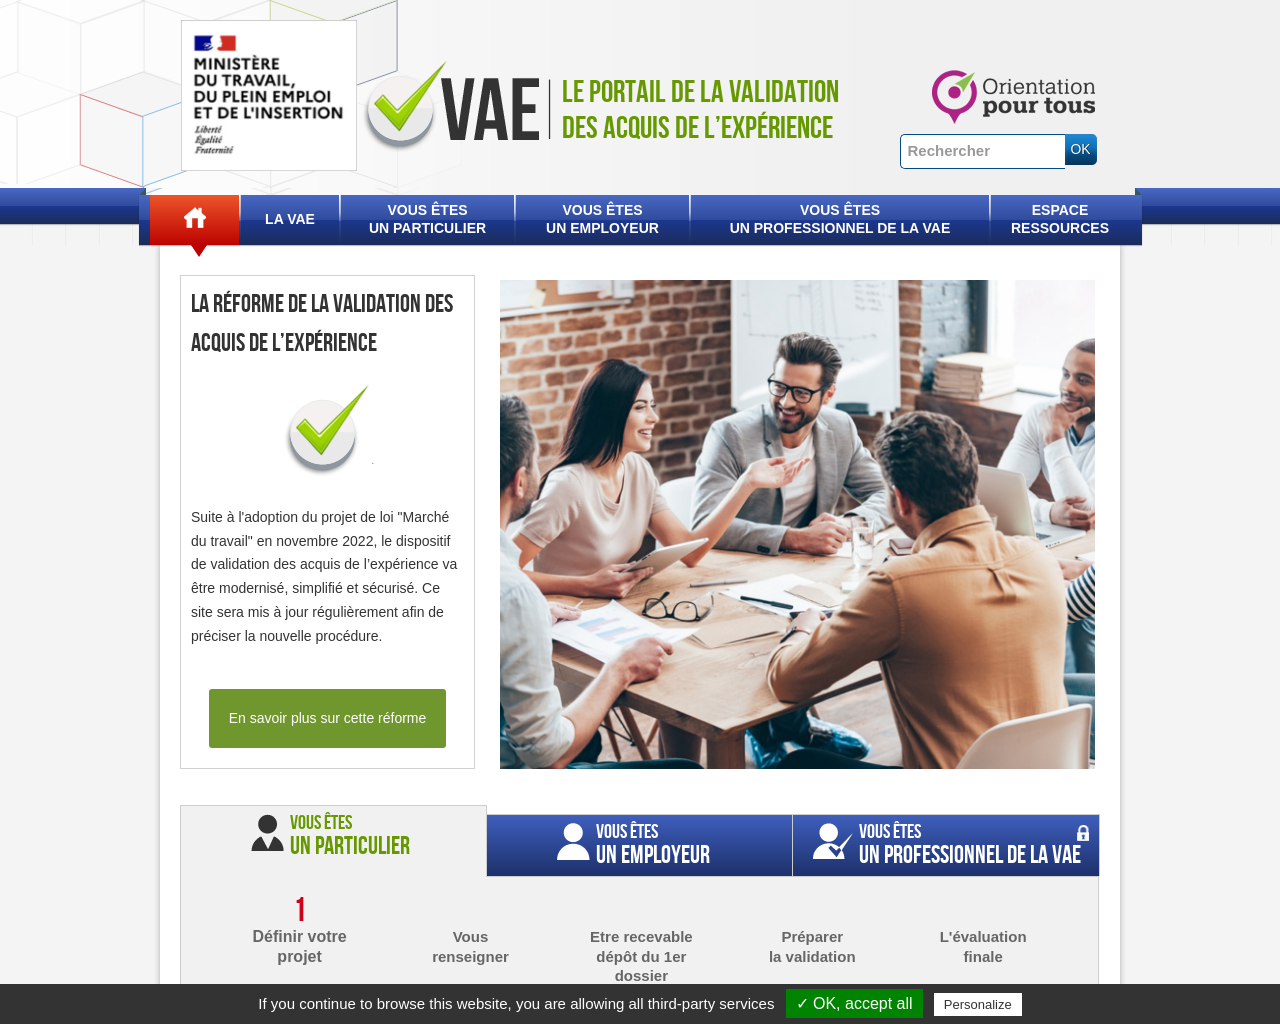 www.vae.gouv.fr